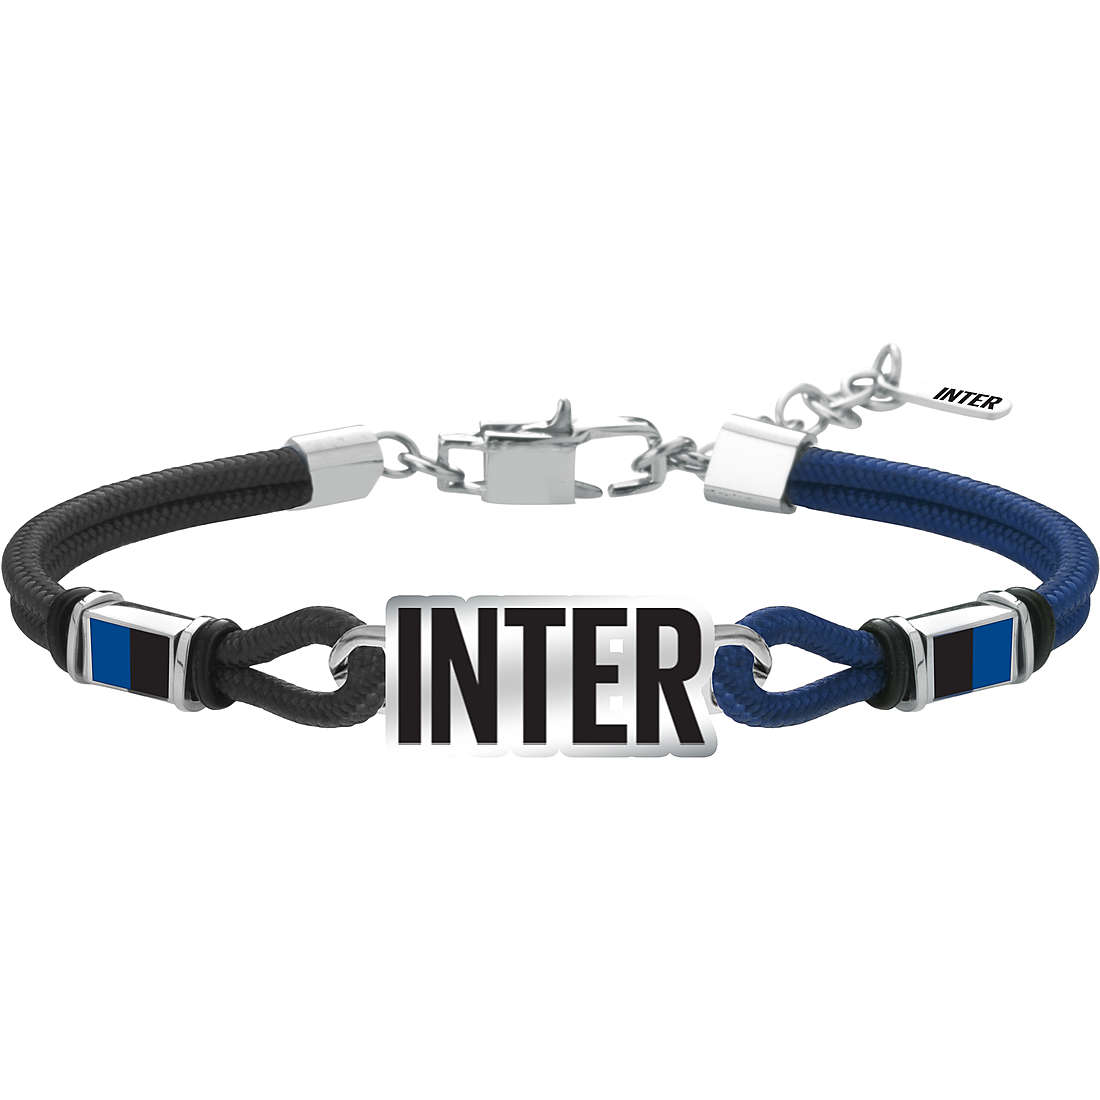 bracelet homme bijoux Inter Gioielli Squadre B-IB003UCB